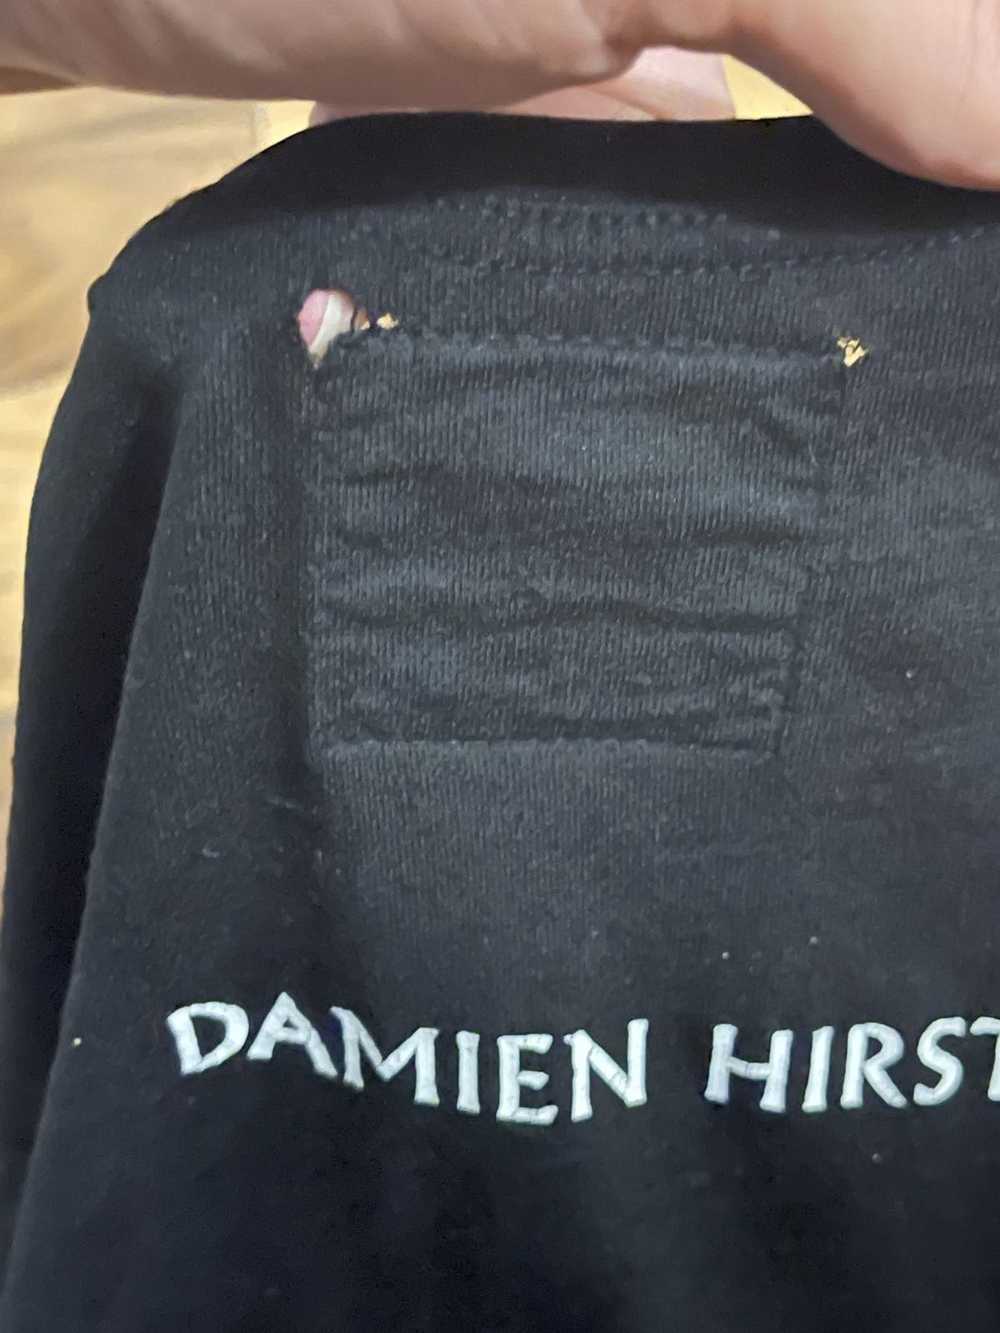 Damien Hirst Damien Hirst x Other Critera Poisons - image 3